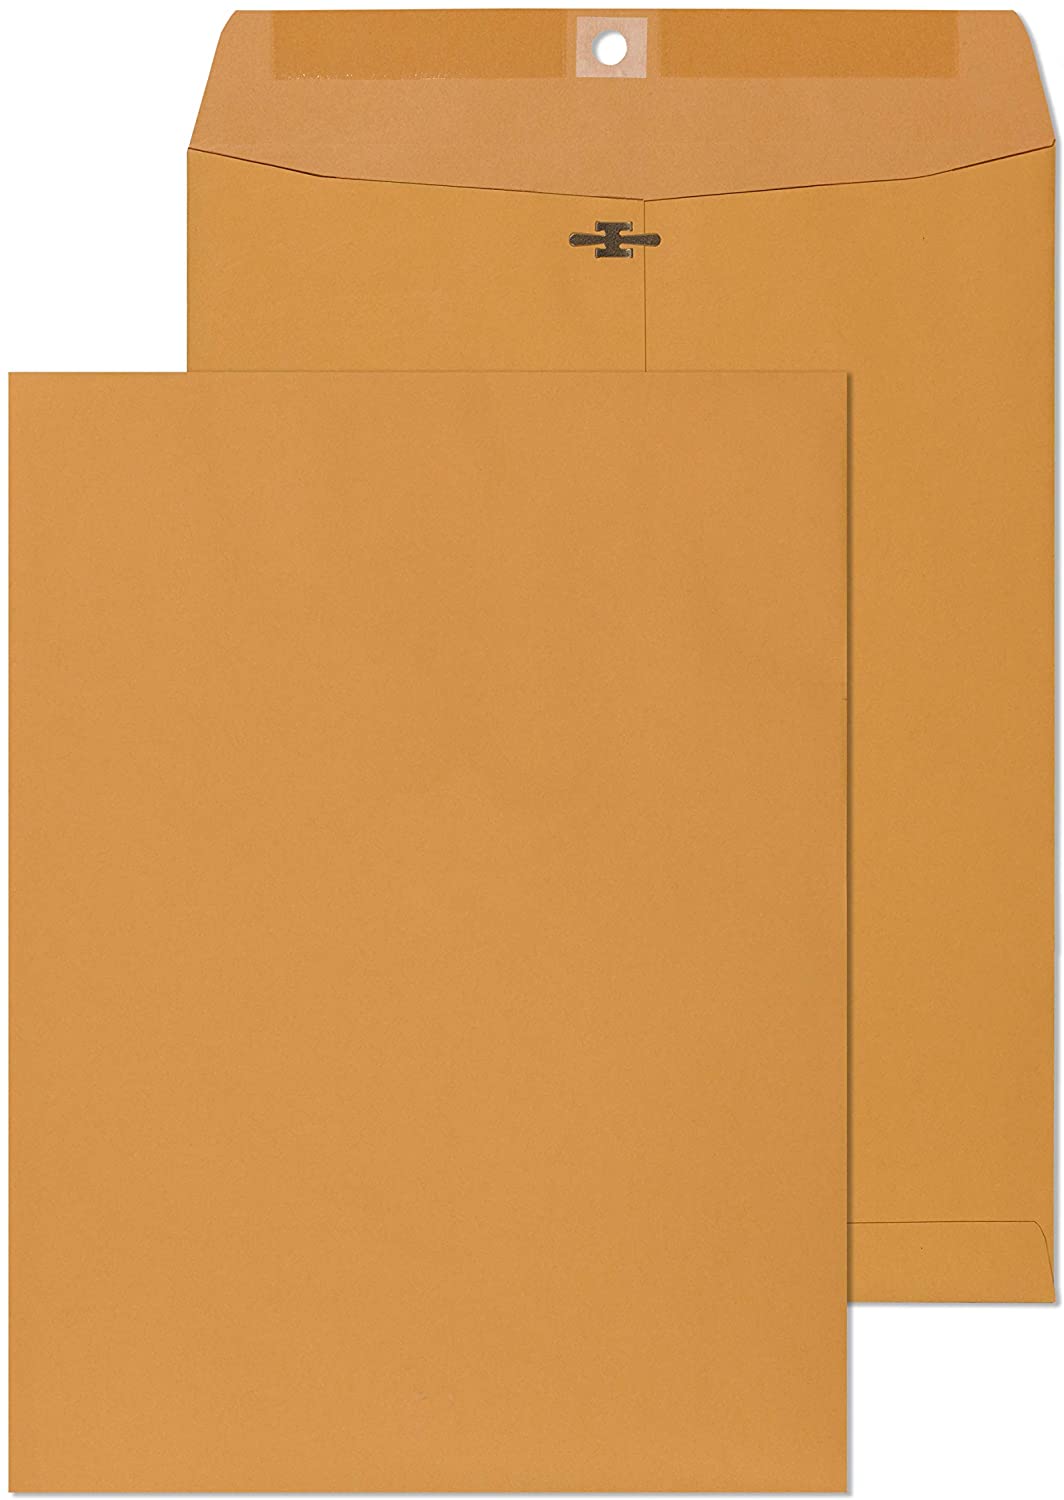 Catalog Envelope 9"x12" 1/250